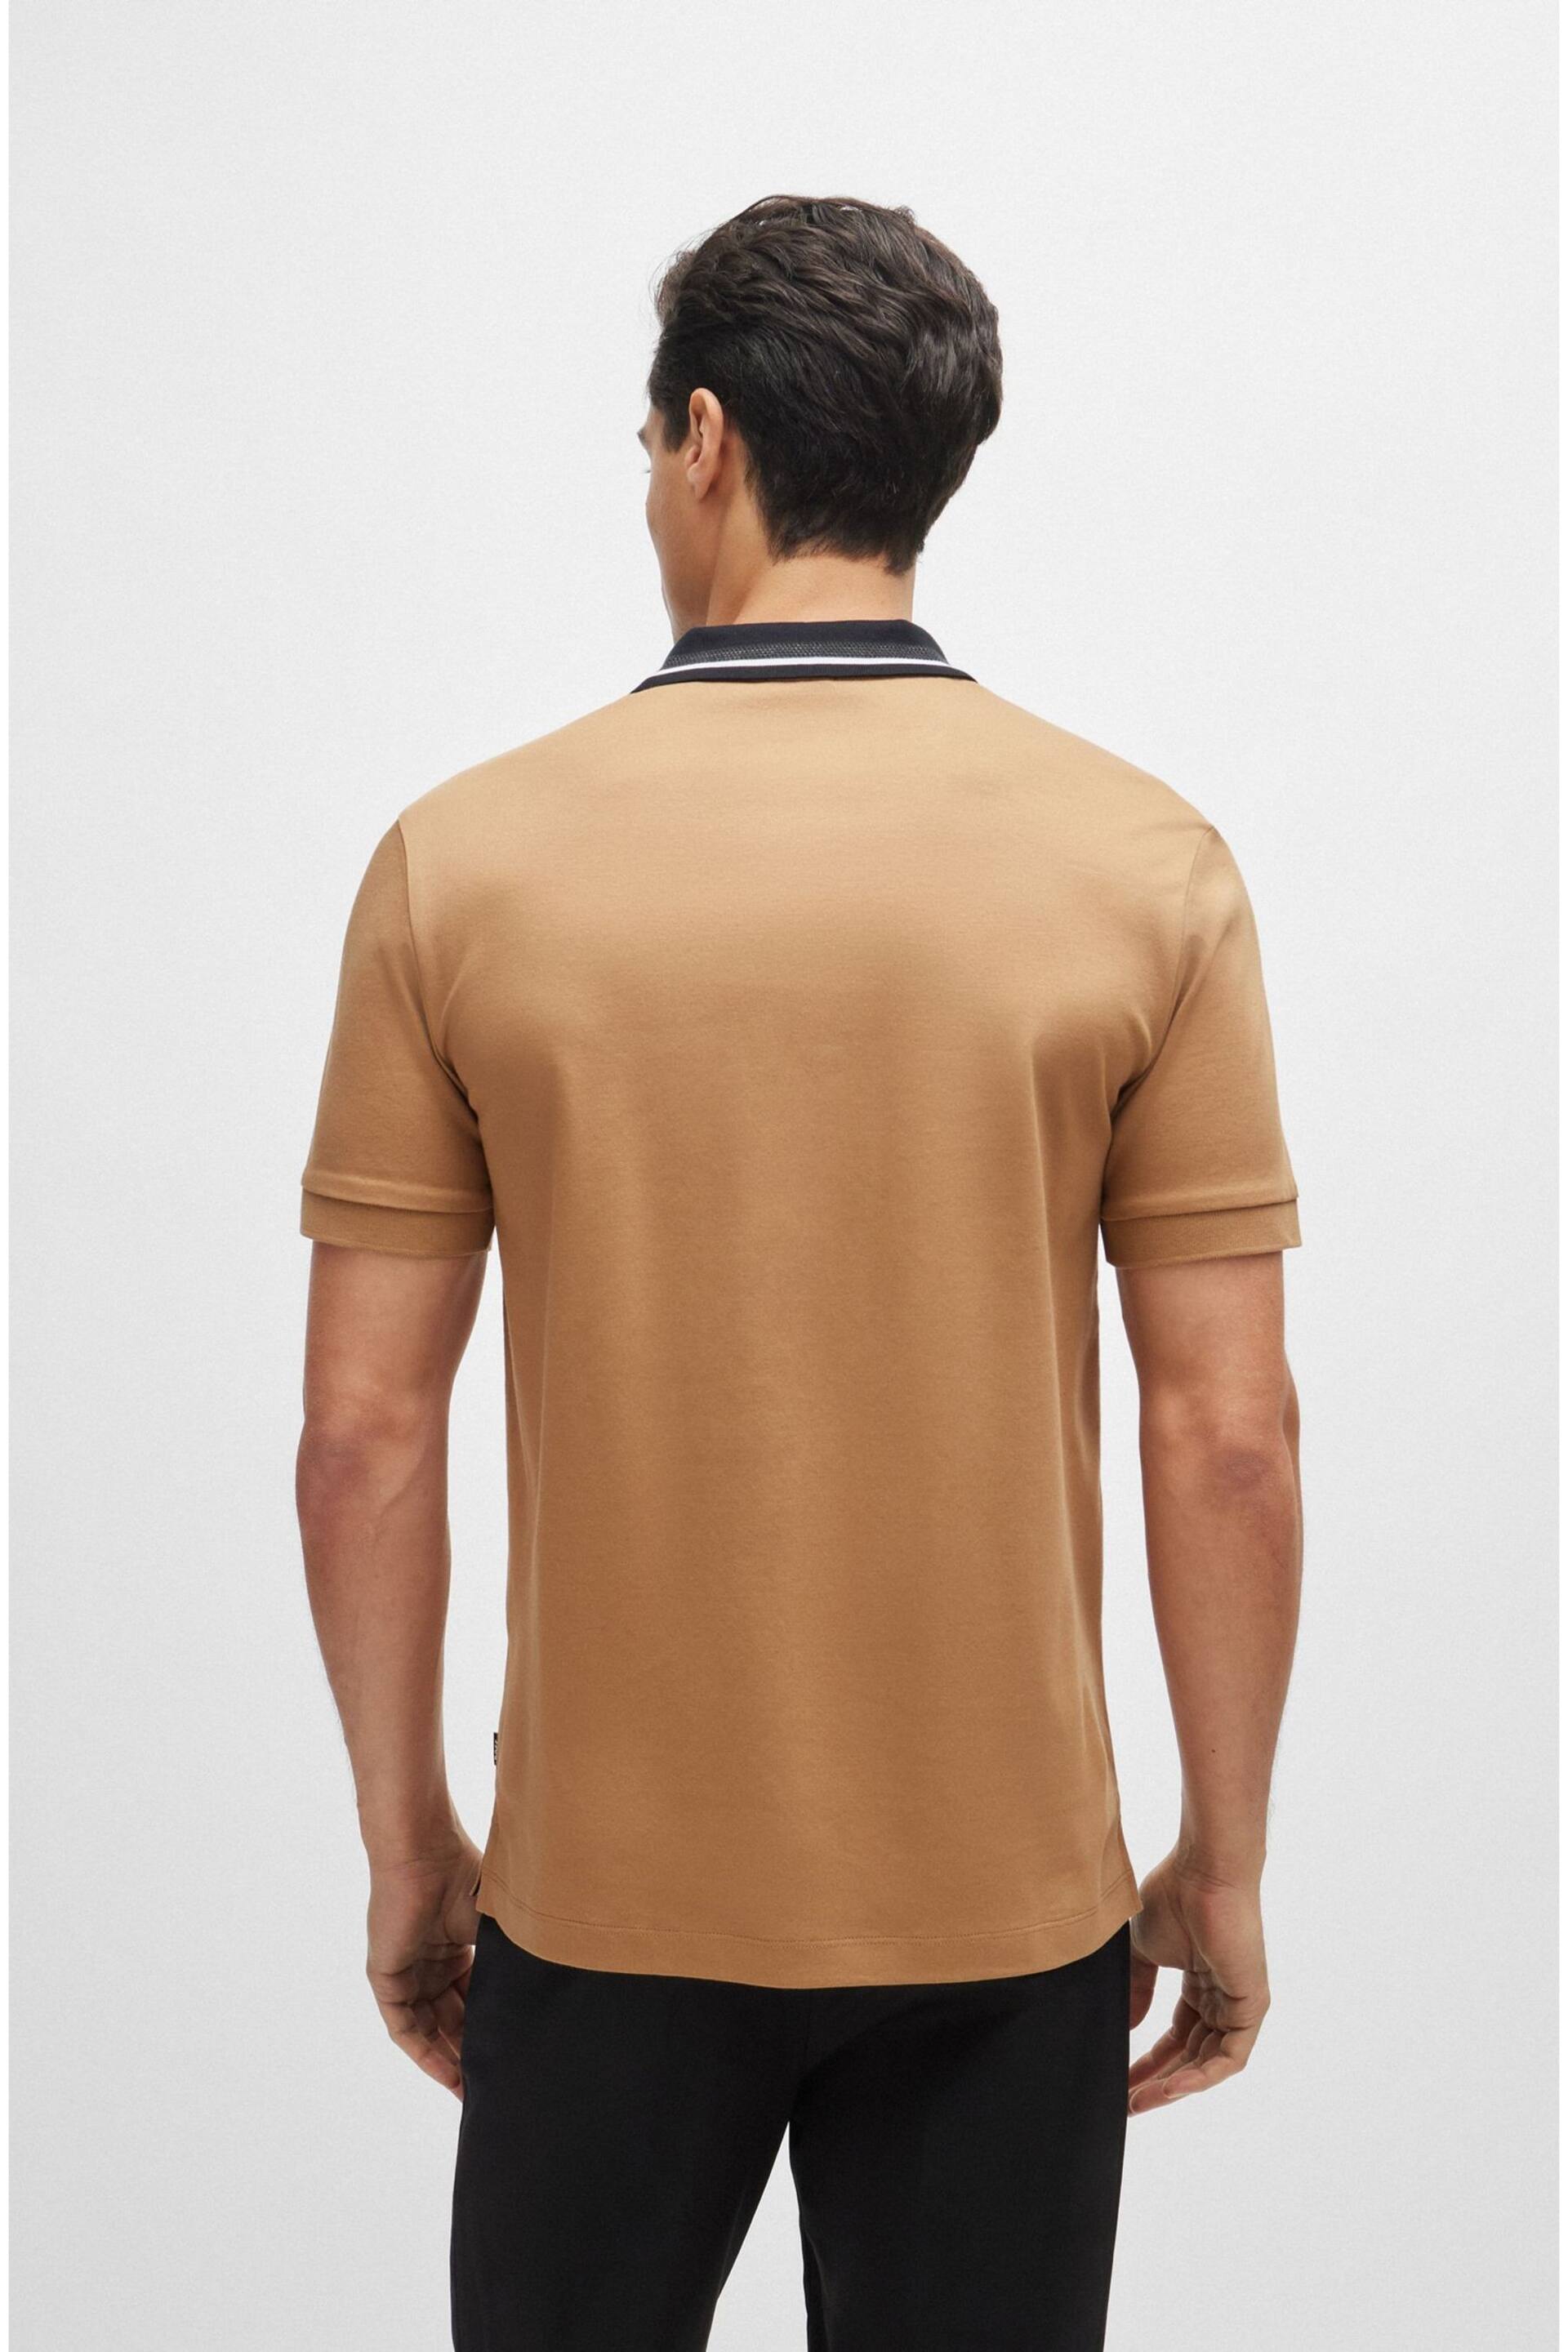 BOSS Tan Brown Contrast Collar Slim Fit Polo Shirt - Image 3 of 5